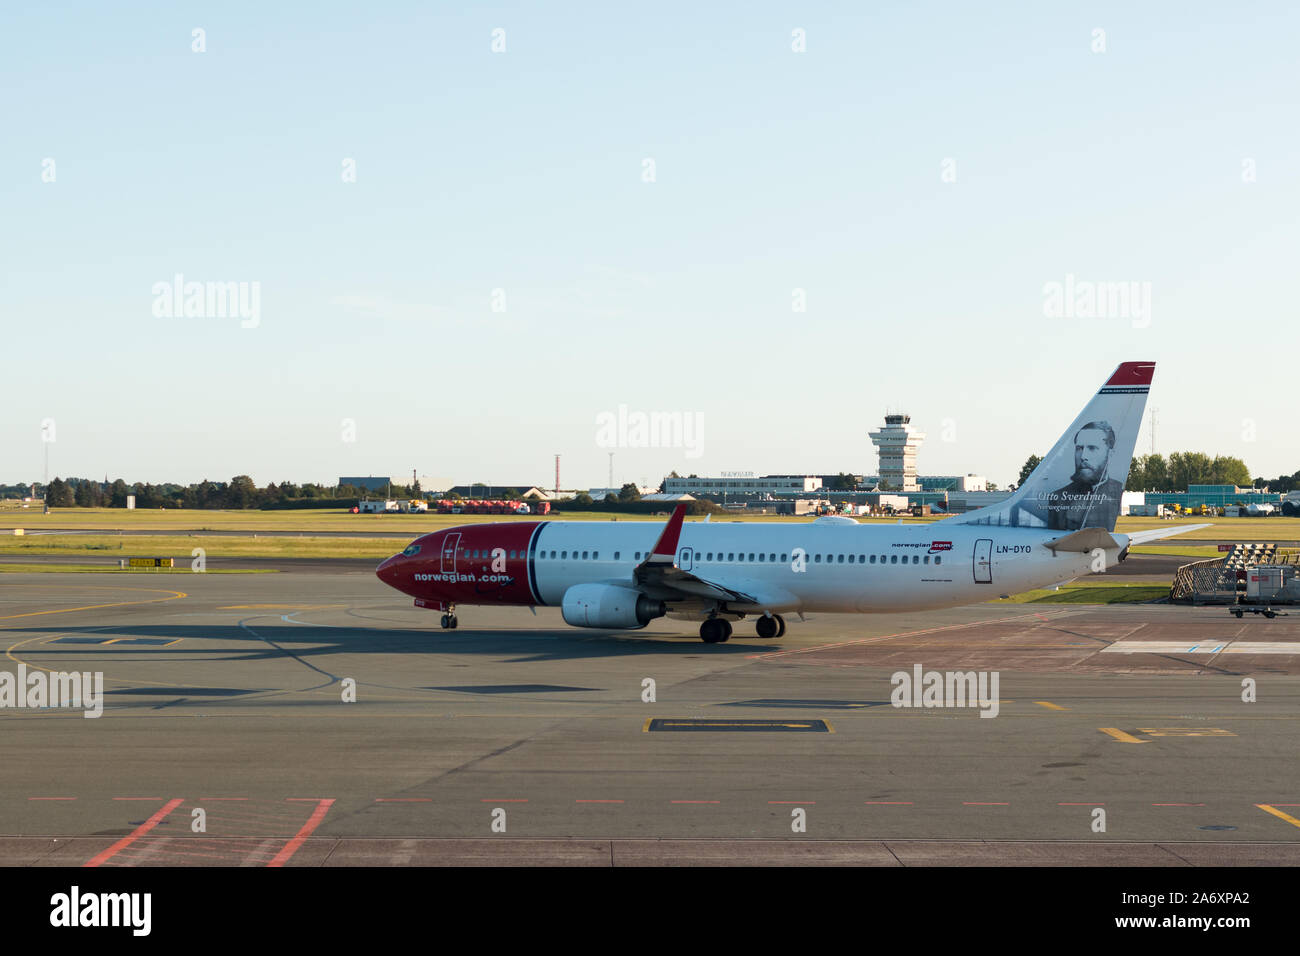 Copenhagen airport, Denmark - August 24, 2019: A Norwegian airline´s Boeing 737-800, on the runway ready to take off at Copenhagen-Kastrup airport Stock Photo